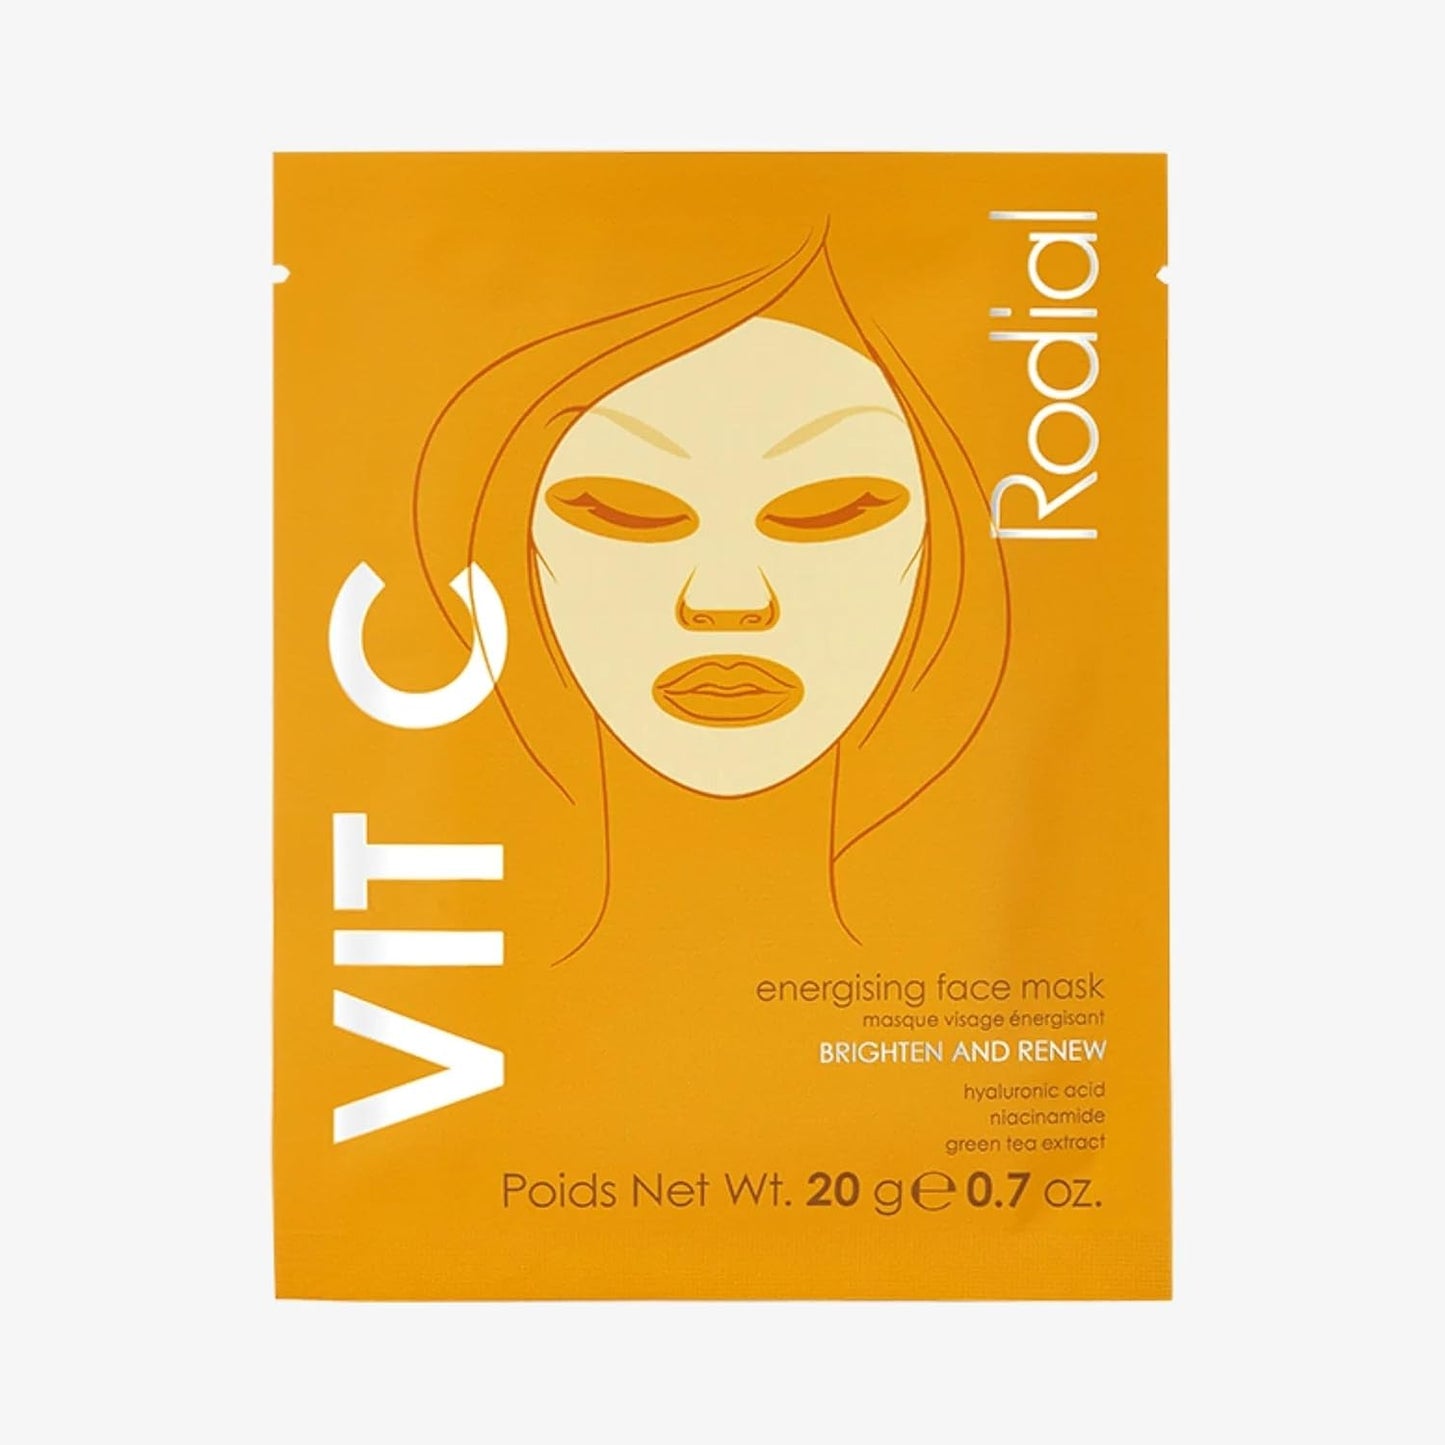 Rodial Energising Face Mask Vit C (1 Sachet) Under Eye Luminosity Boost, Hyaluronic Acid, Vitamin C, Niacinamide and Green Tea, Rejuvenating Eye Patches,..